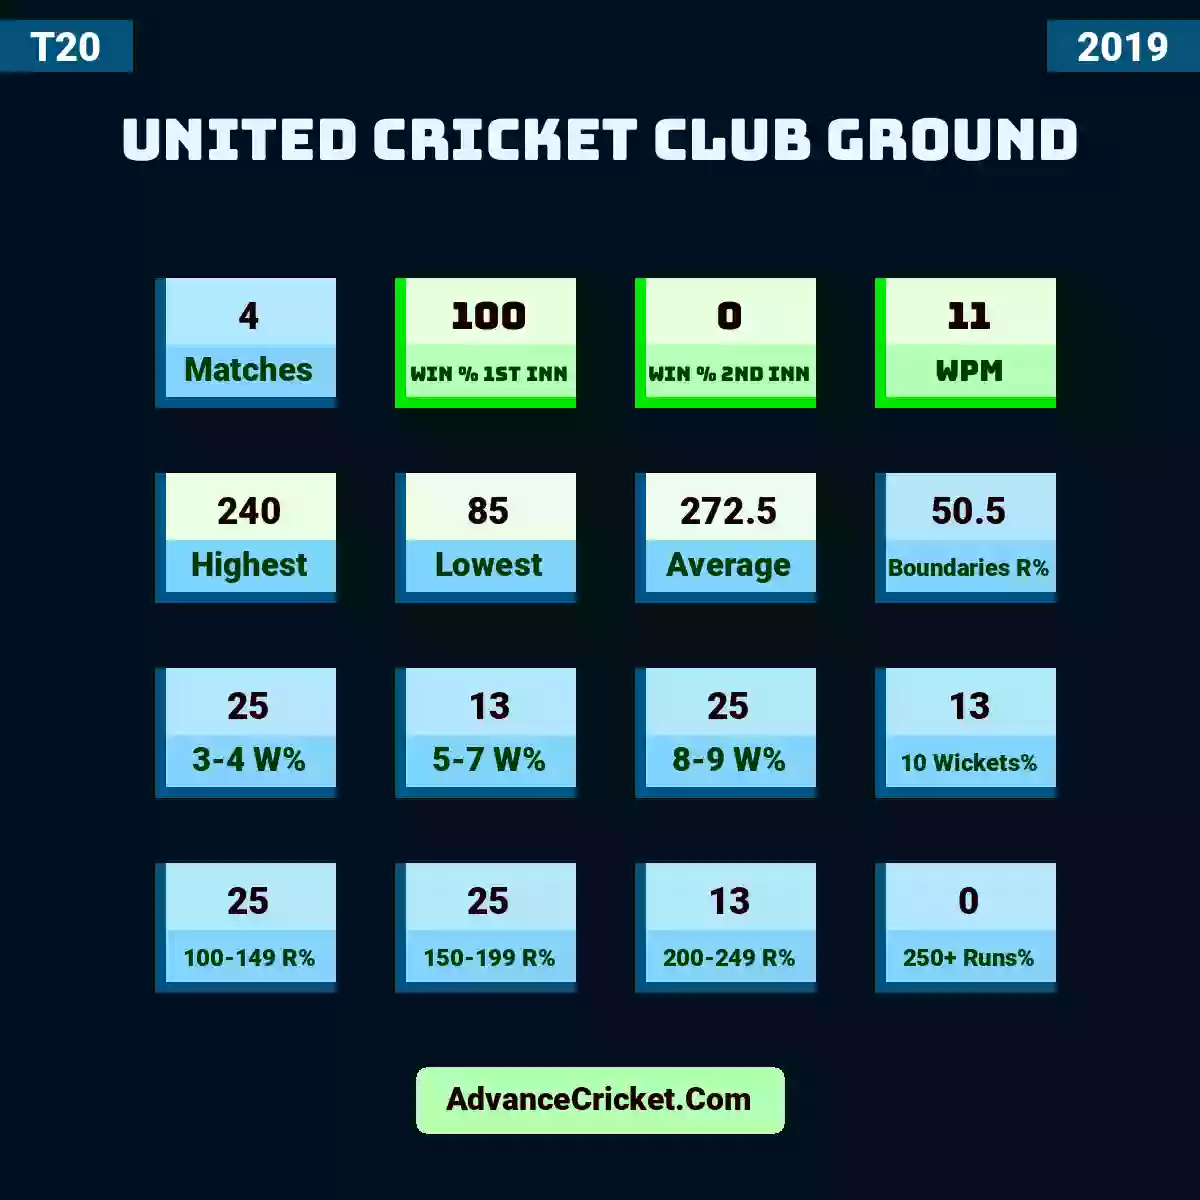 Image showing United Cricket Club Ground with Matches: 4, Win % 1st Inn: 100, Win % 2nd Inn: 0, WPM: 11, Highest: 240, Lowest: 85, Average: 272.5, Boundaries R%: 50.5, 3-4 W%: 25, 5-7 W%: 13, 8-9 W%: 25, 10 Wickets%: 13, 100-149 R%: 25, 150-199 R%: 25, 200-249 R%: 13, 250+ Runs%: 0.